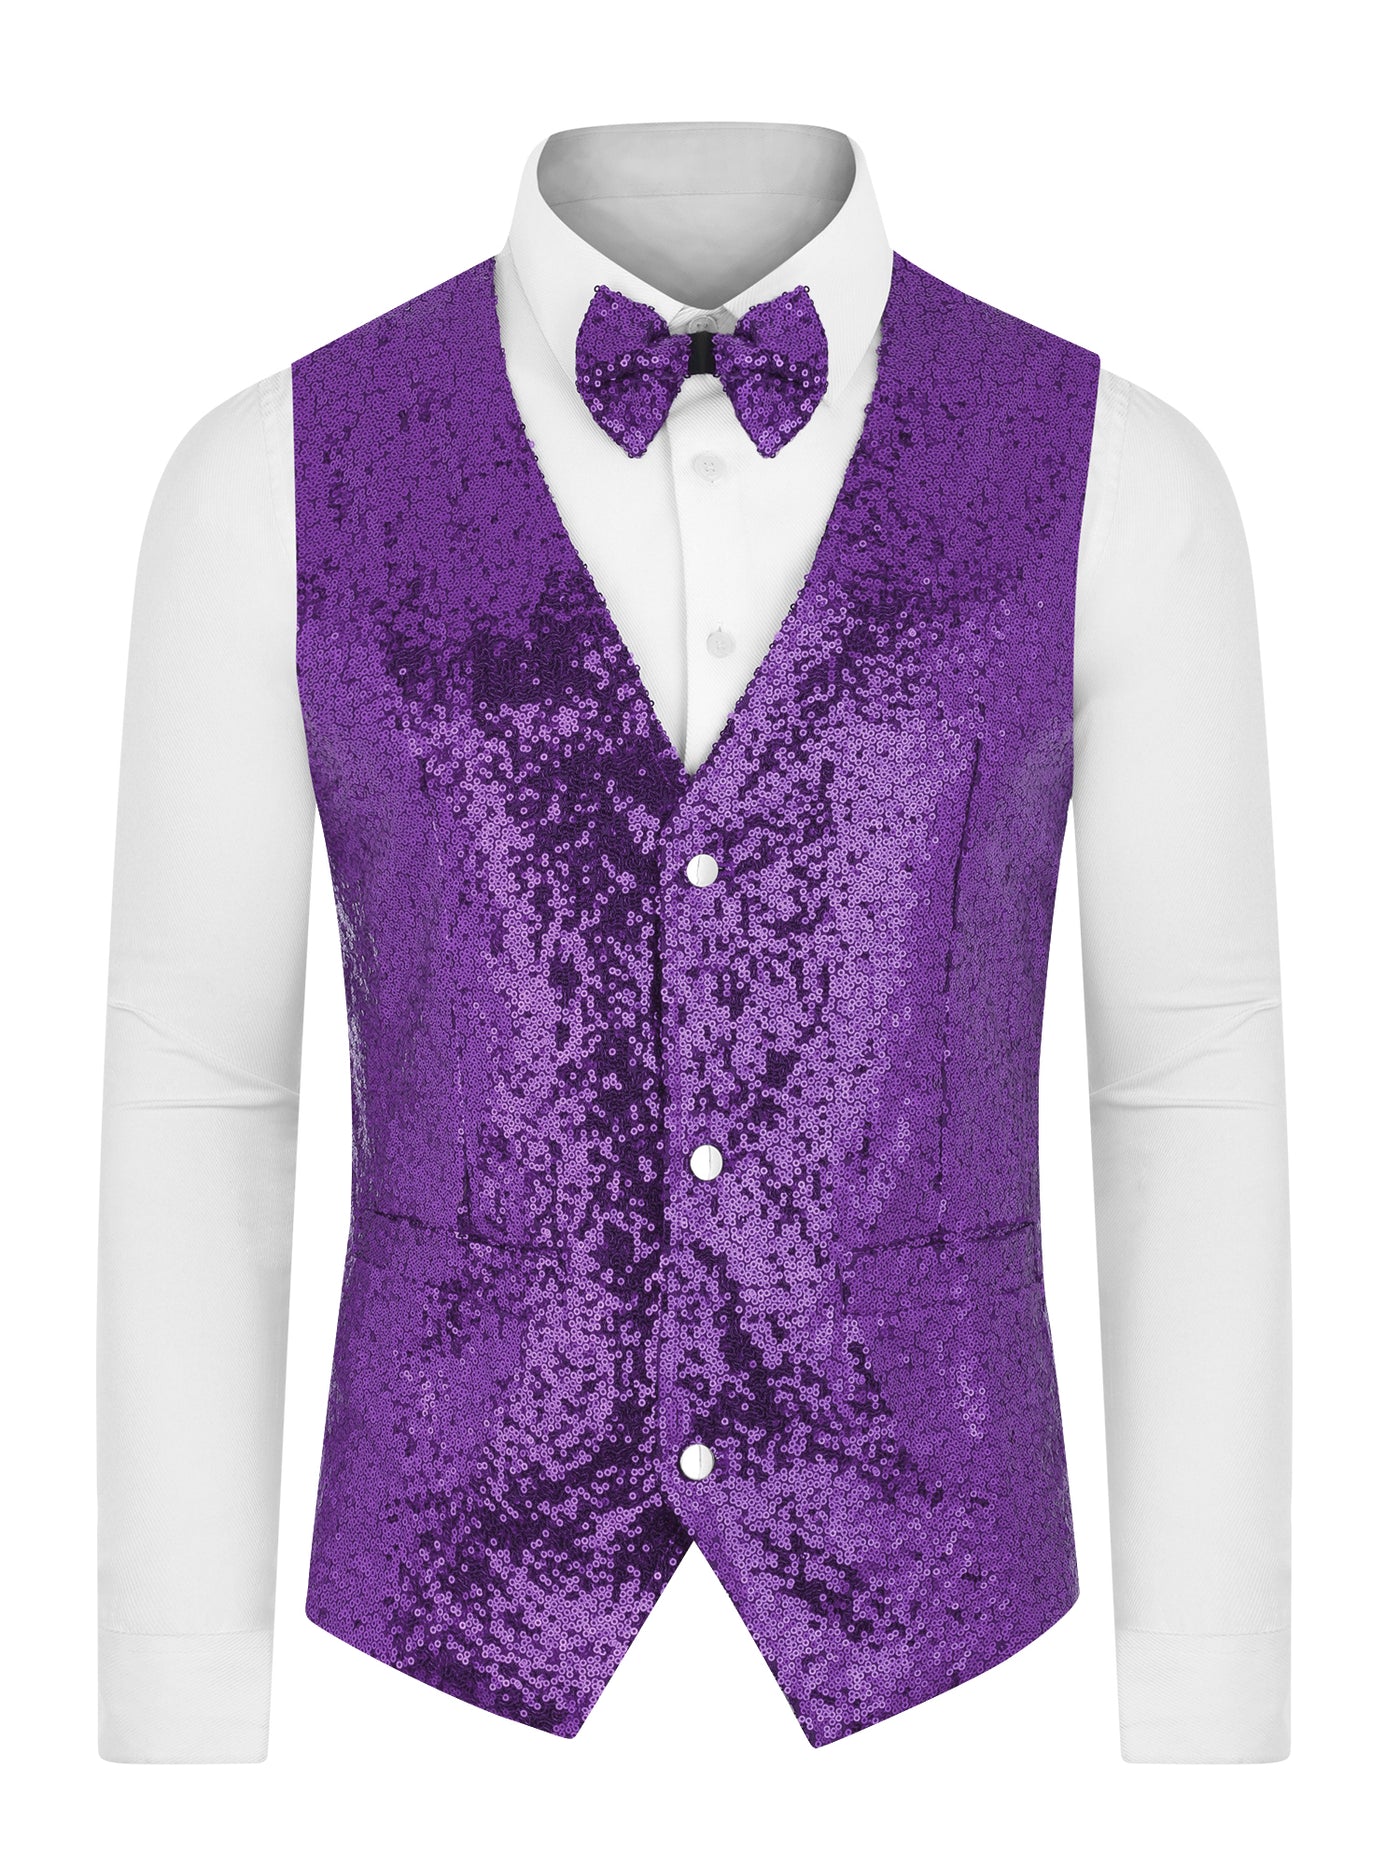 Bublédon Sequins Vest for Men's V-Neck Slim Fit Shiny Disco Party Sleeveless Waistcoat Bowtie